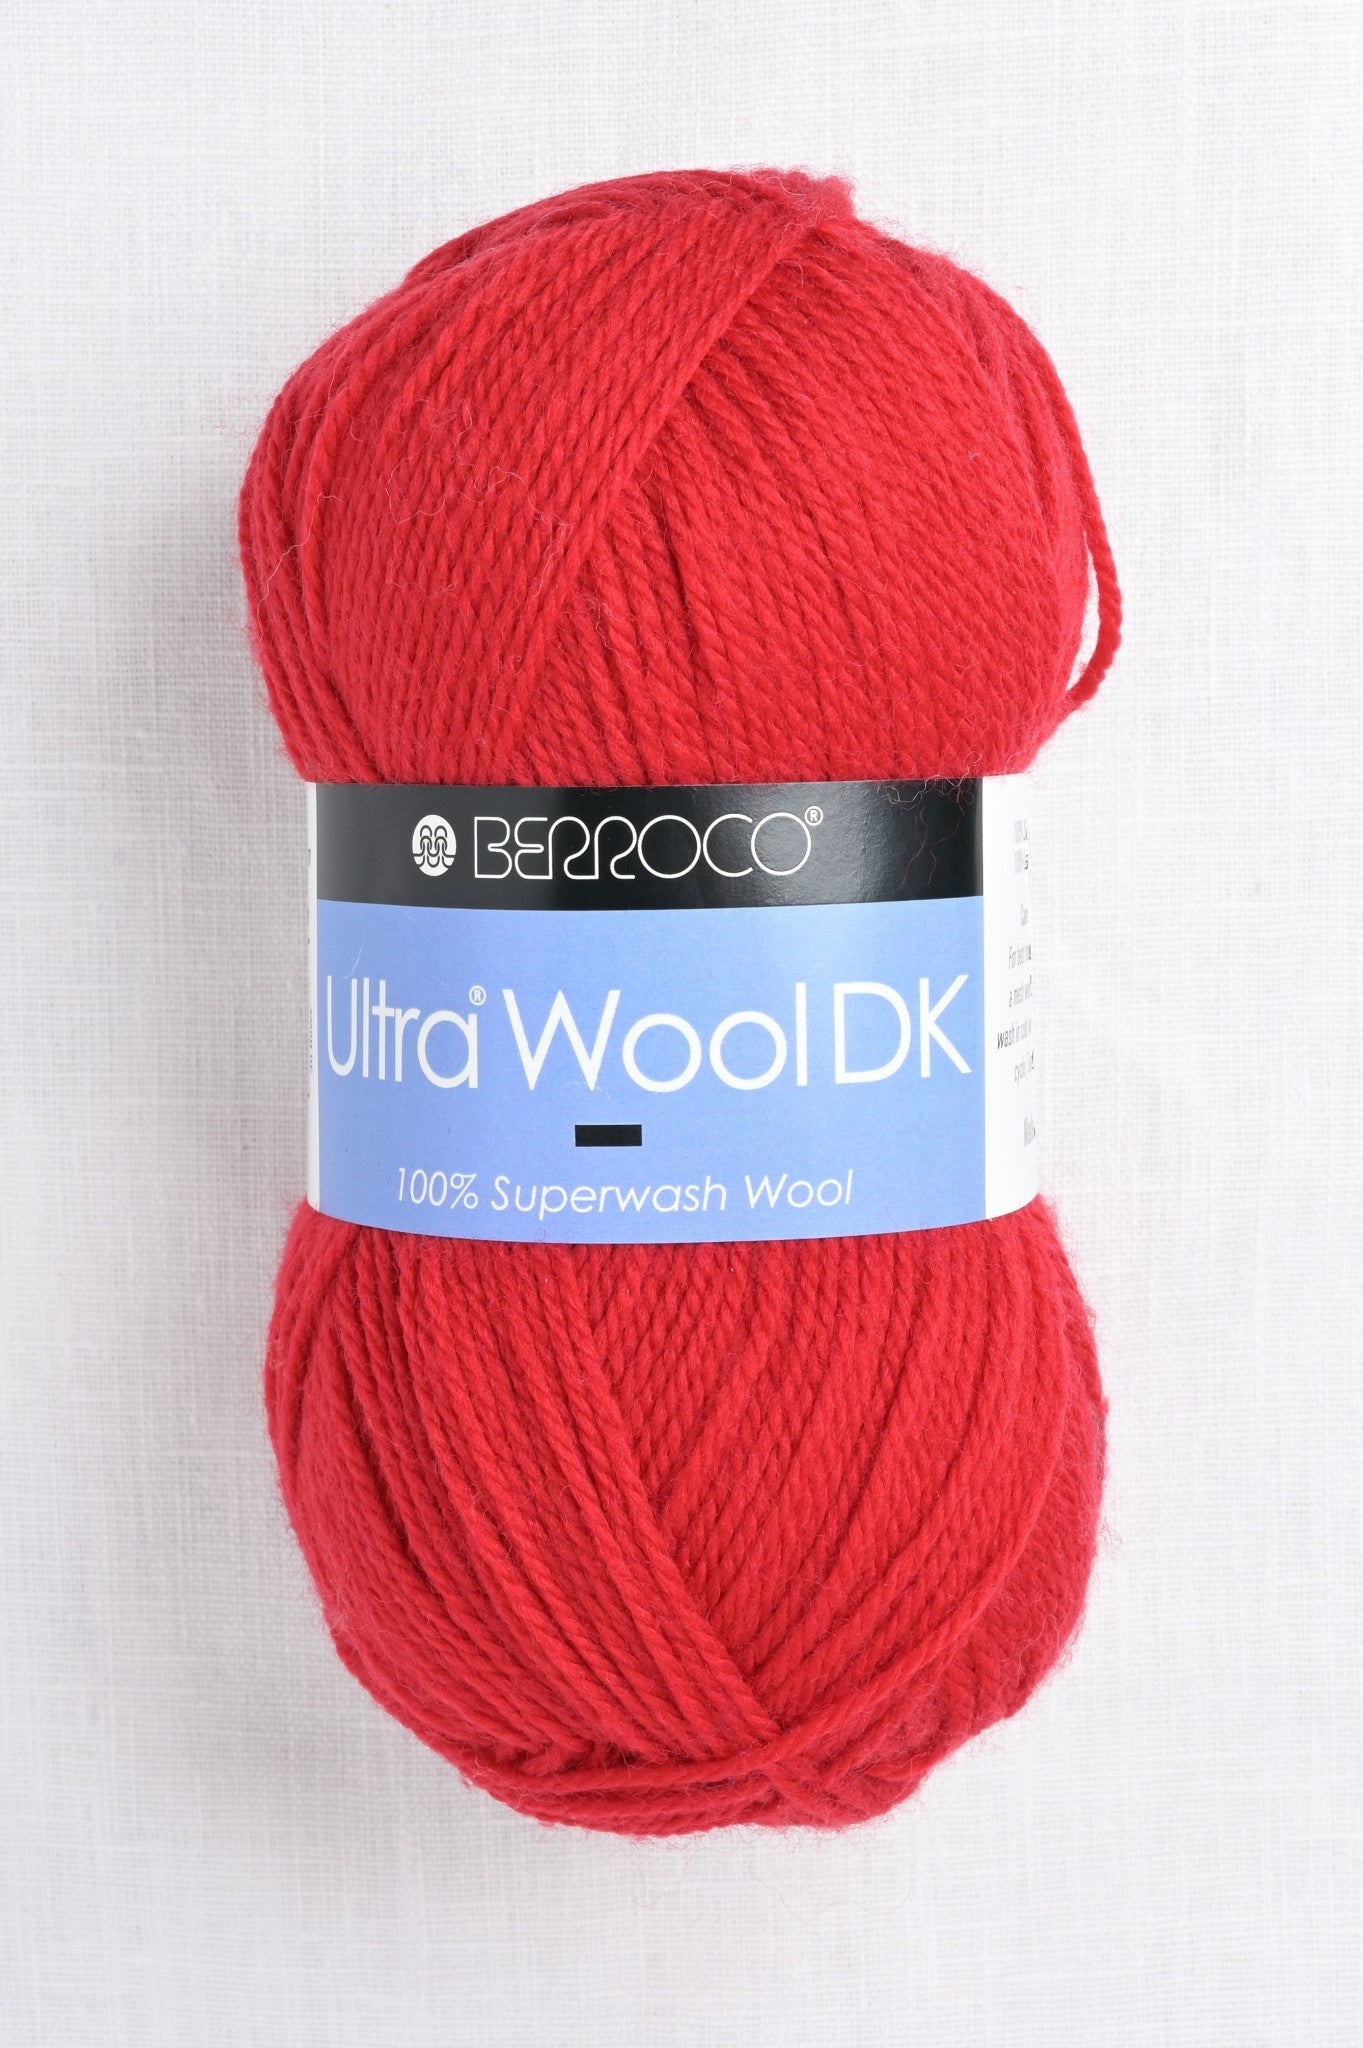 Berroco; Ultra Wool DK; Chili 8350